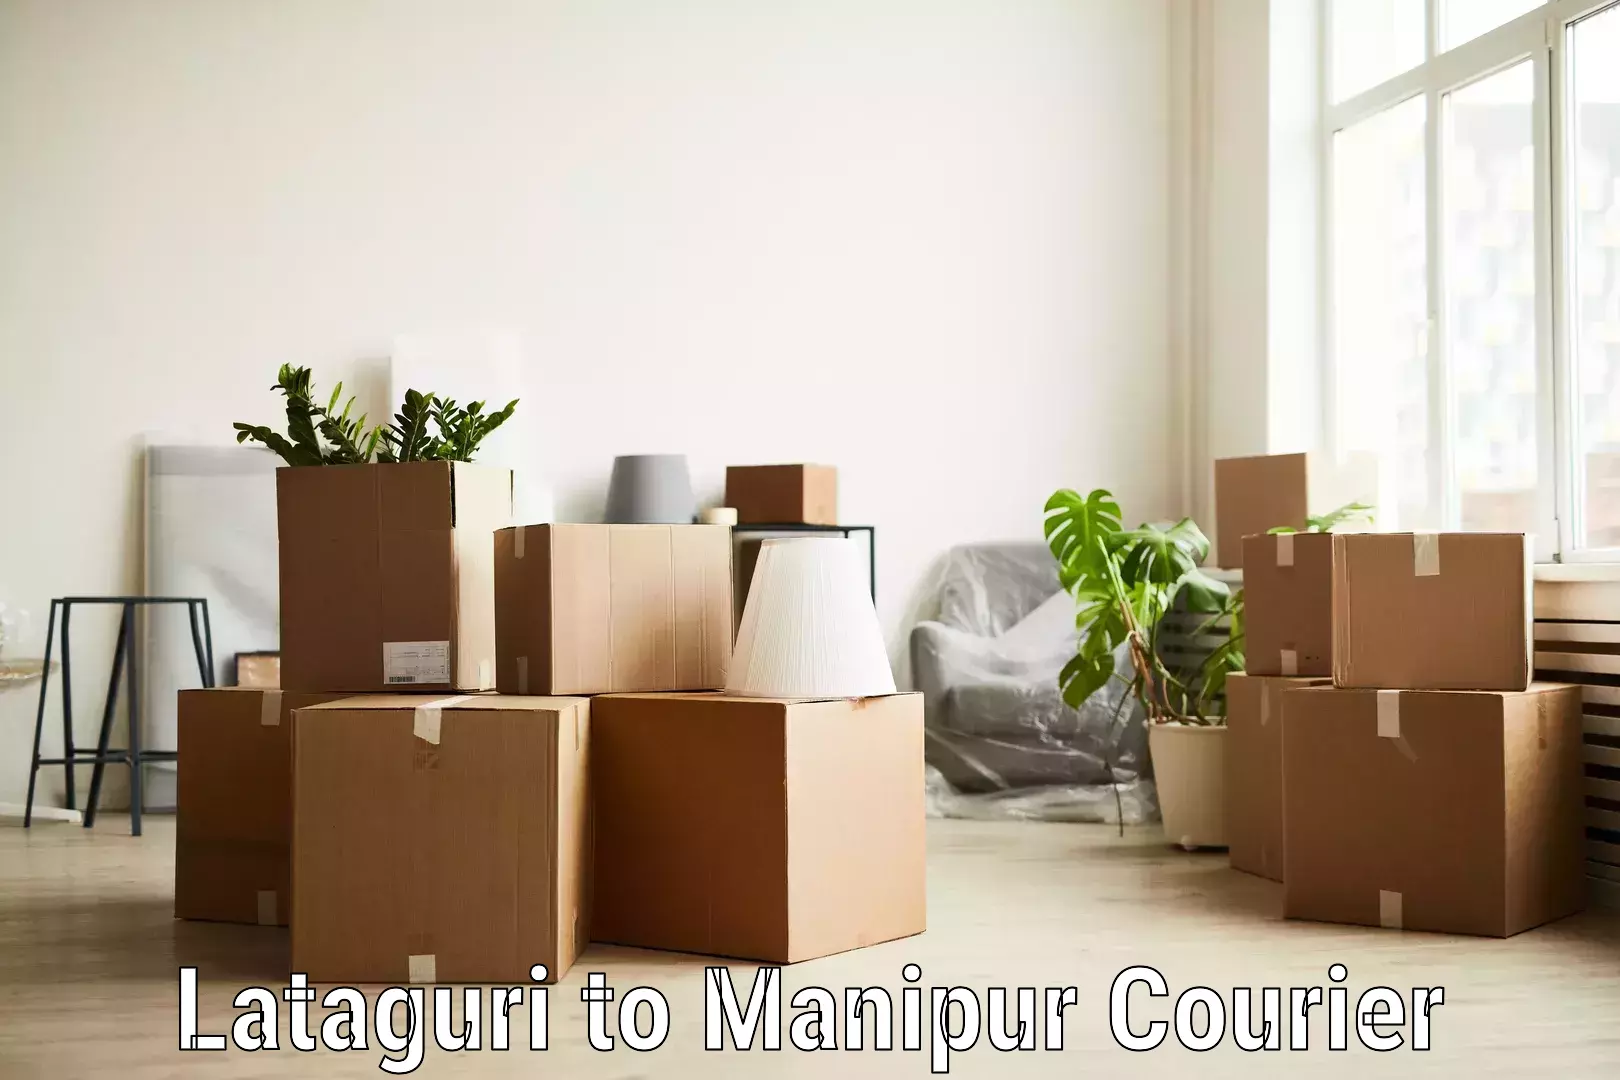 Courier service comparison Lataguri to Manipur